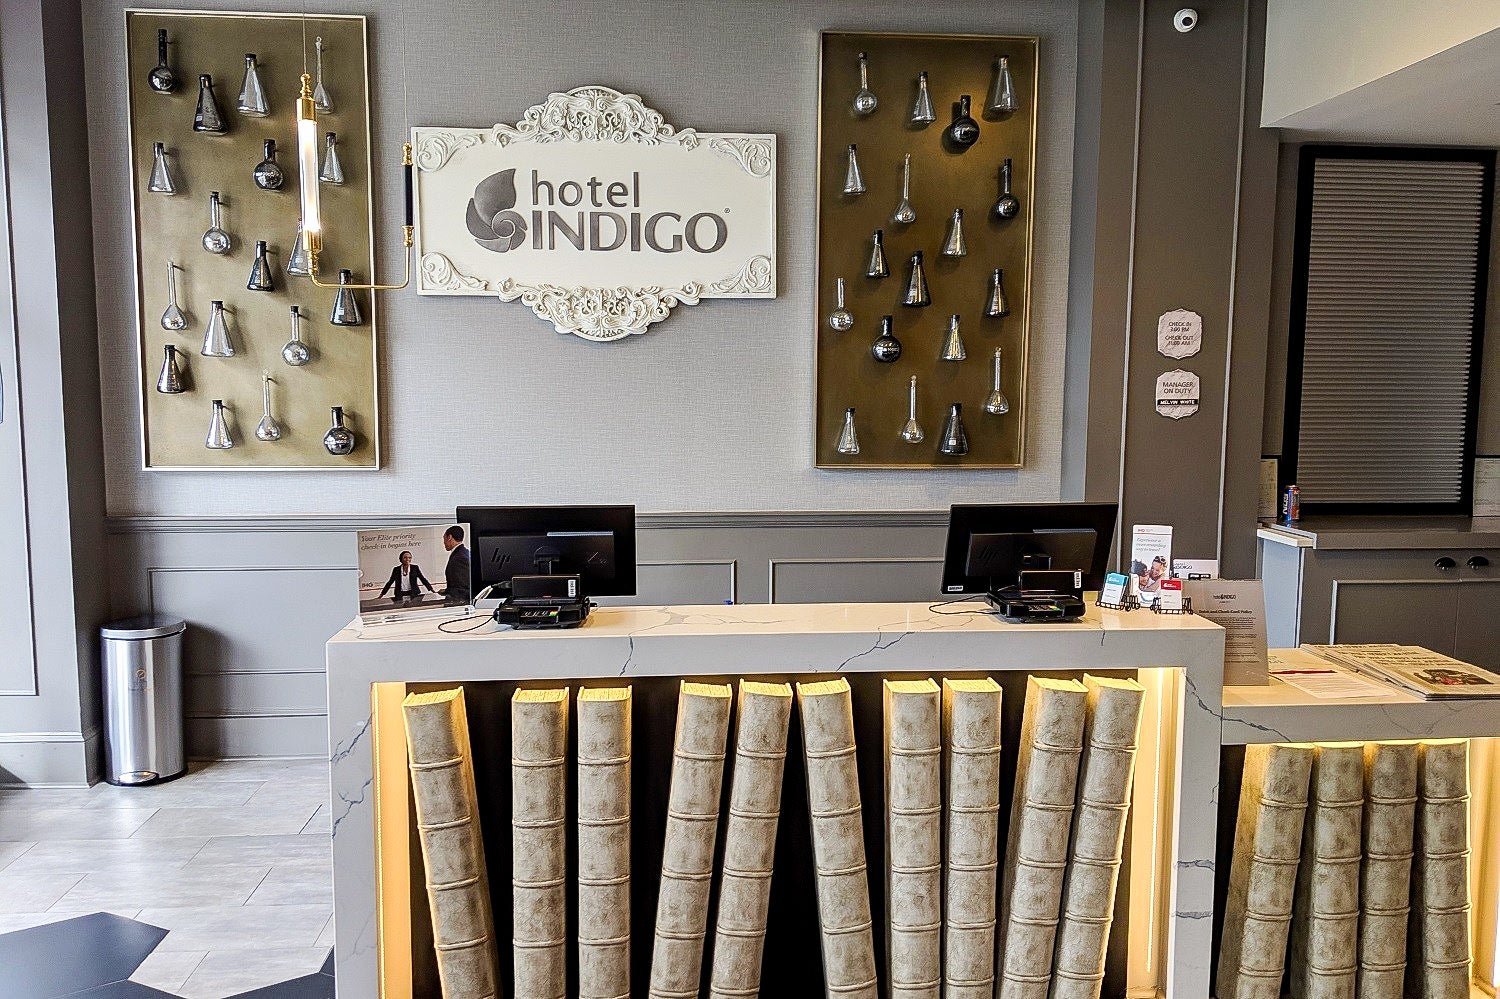 Hotel Indigo Birmingham front desk